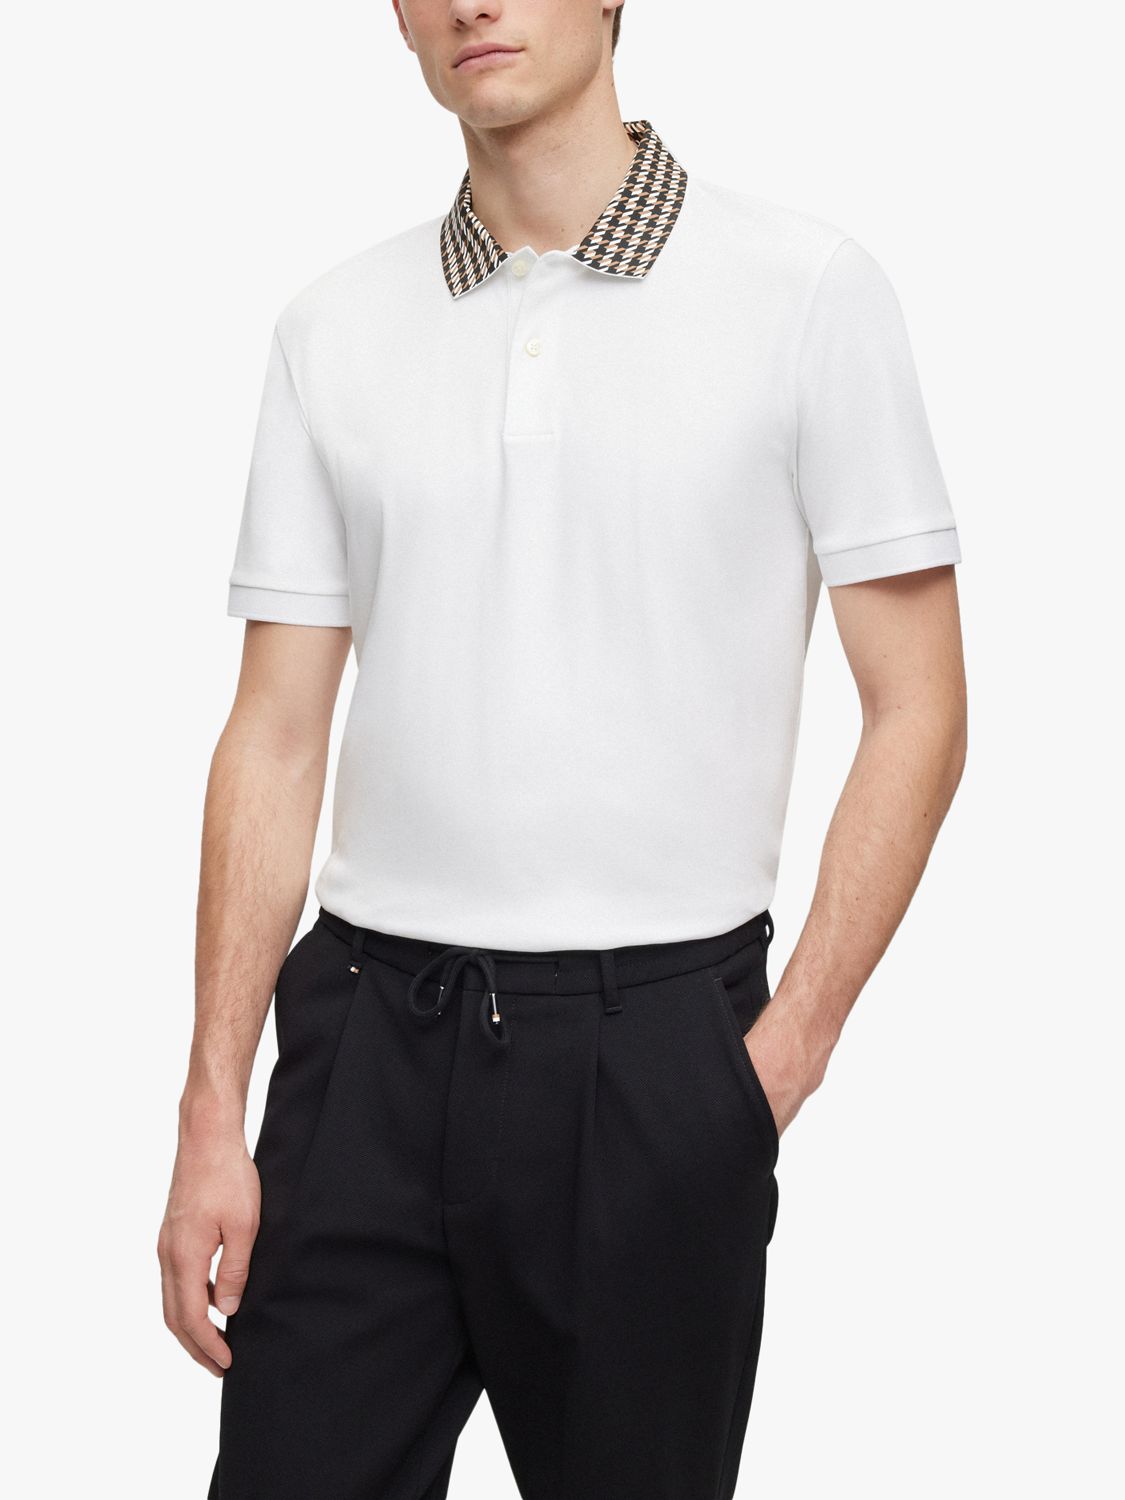 HUGO BOSS Parlay 180 Polo Shirt, White/Black at John Lewis & Partners